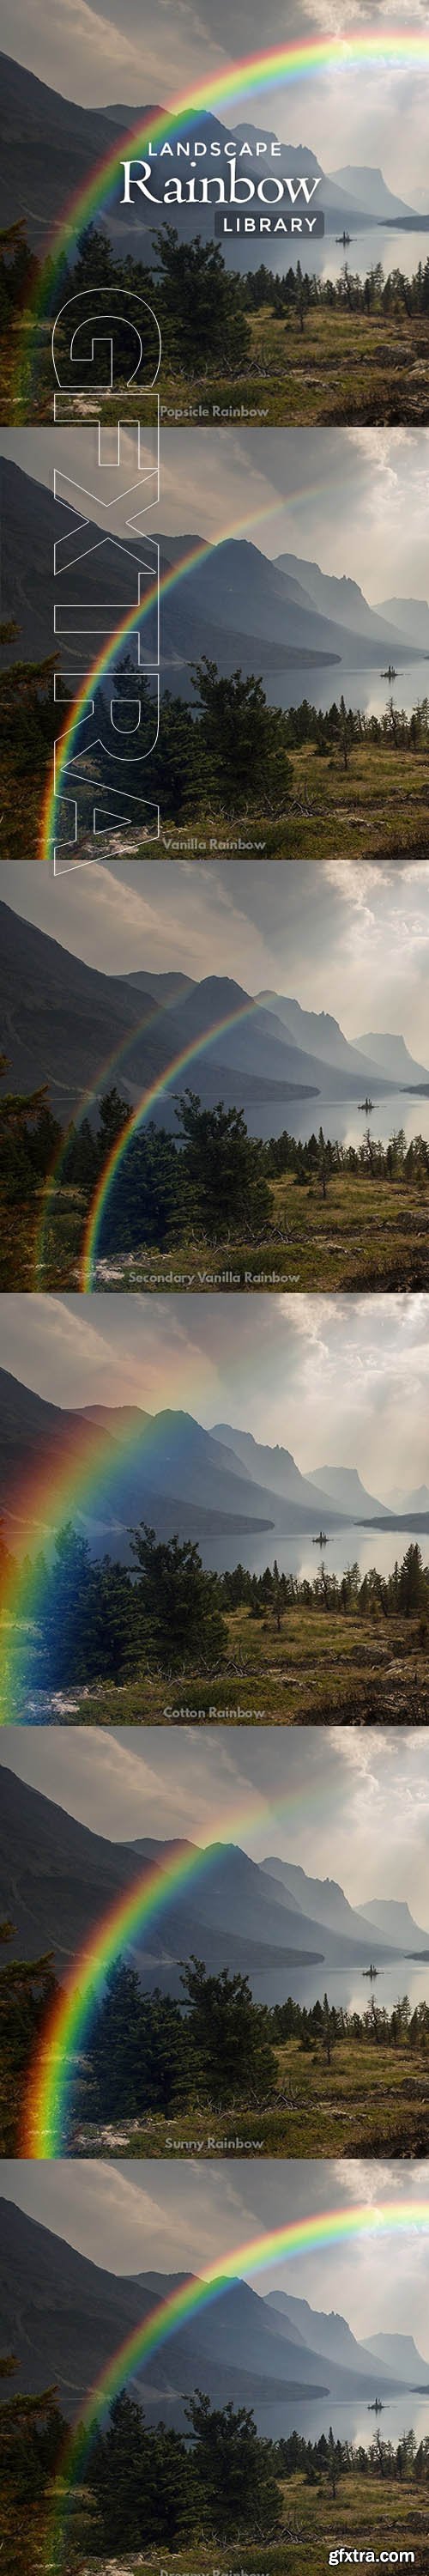 GraphicRiver - Landscape Rainbow Library - Photoshop Action 25878214